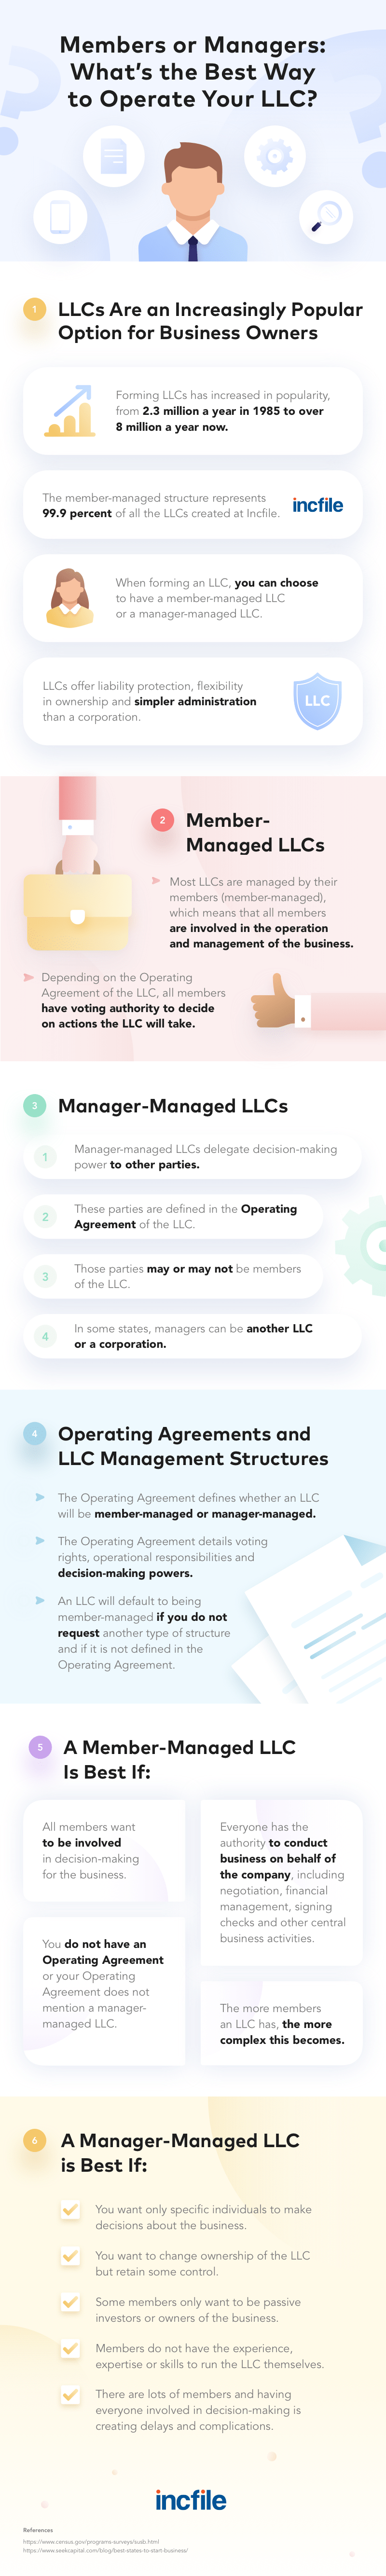 llc-members-vs-managers-3